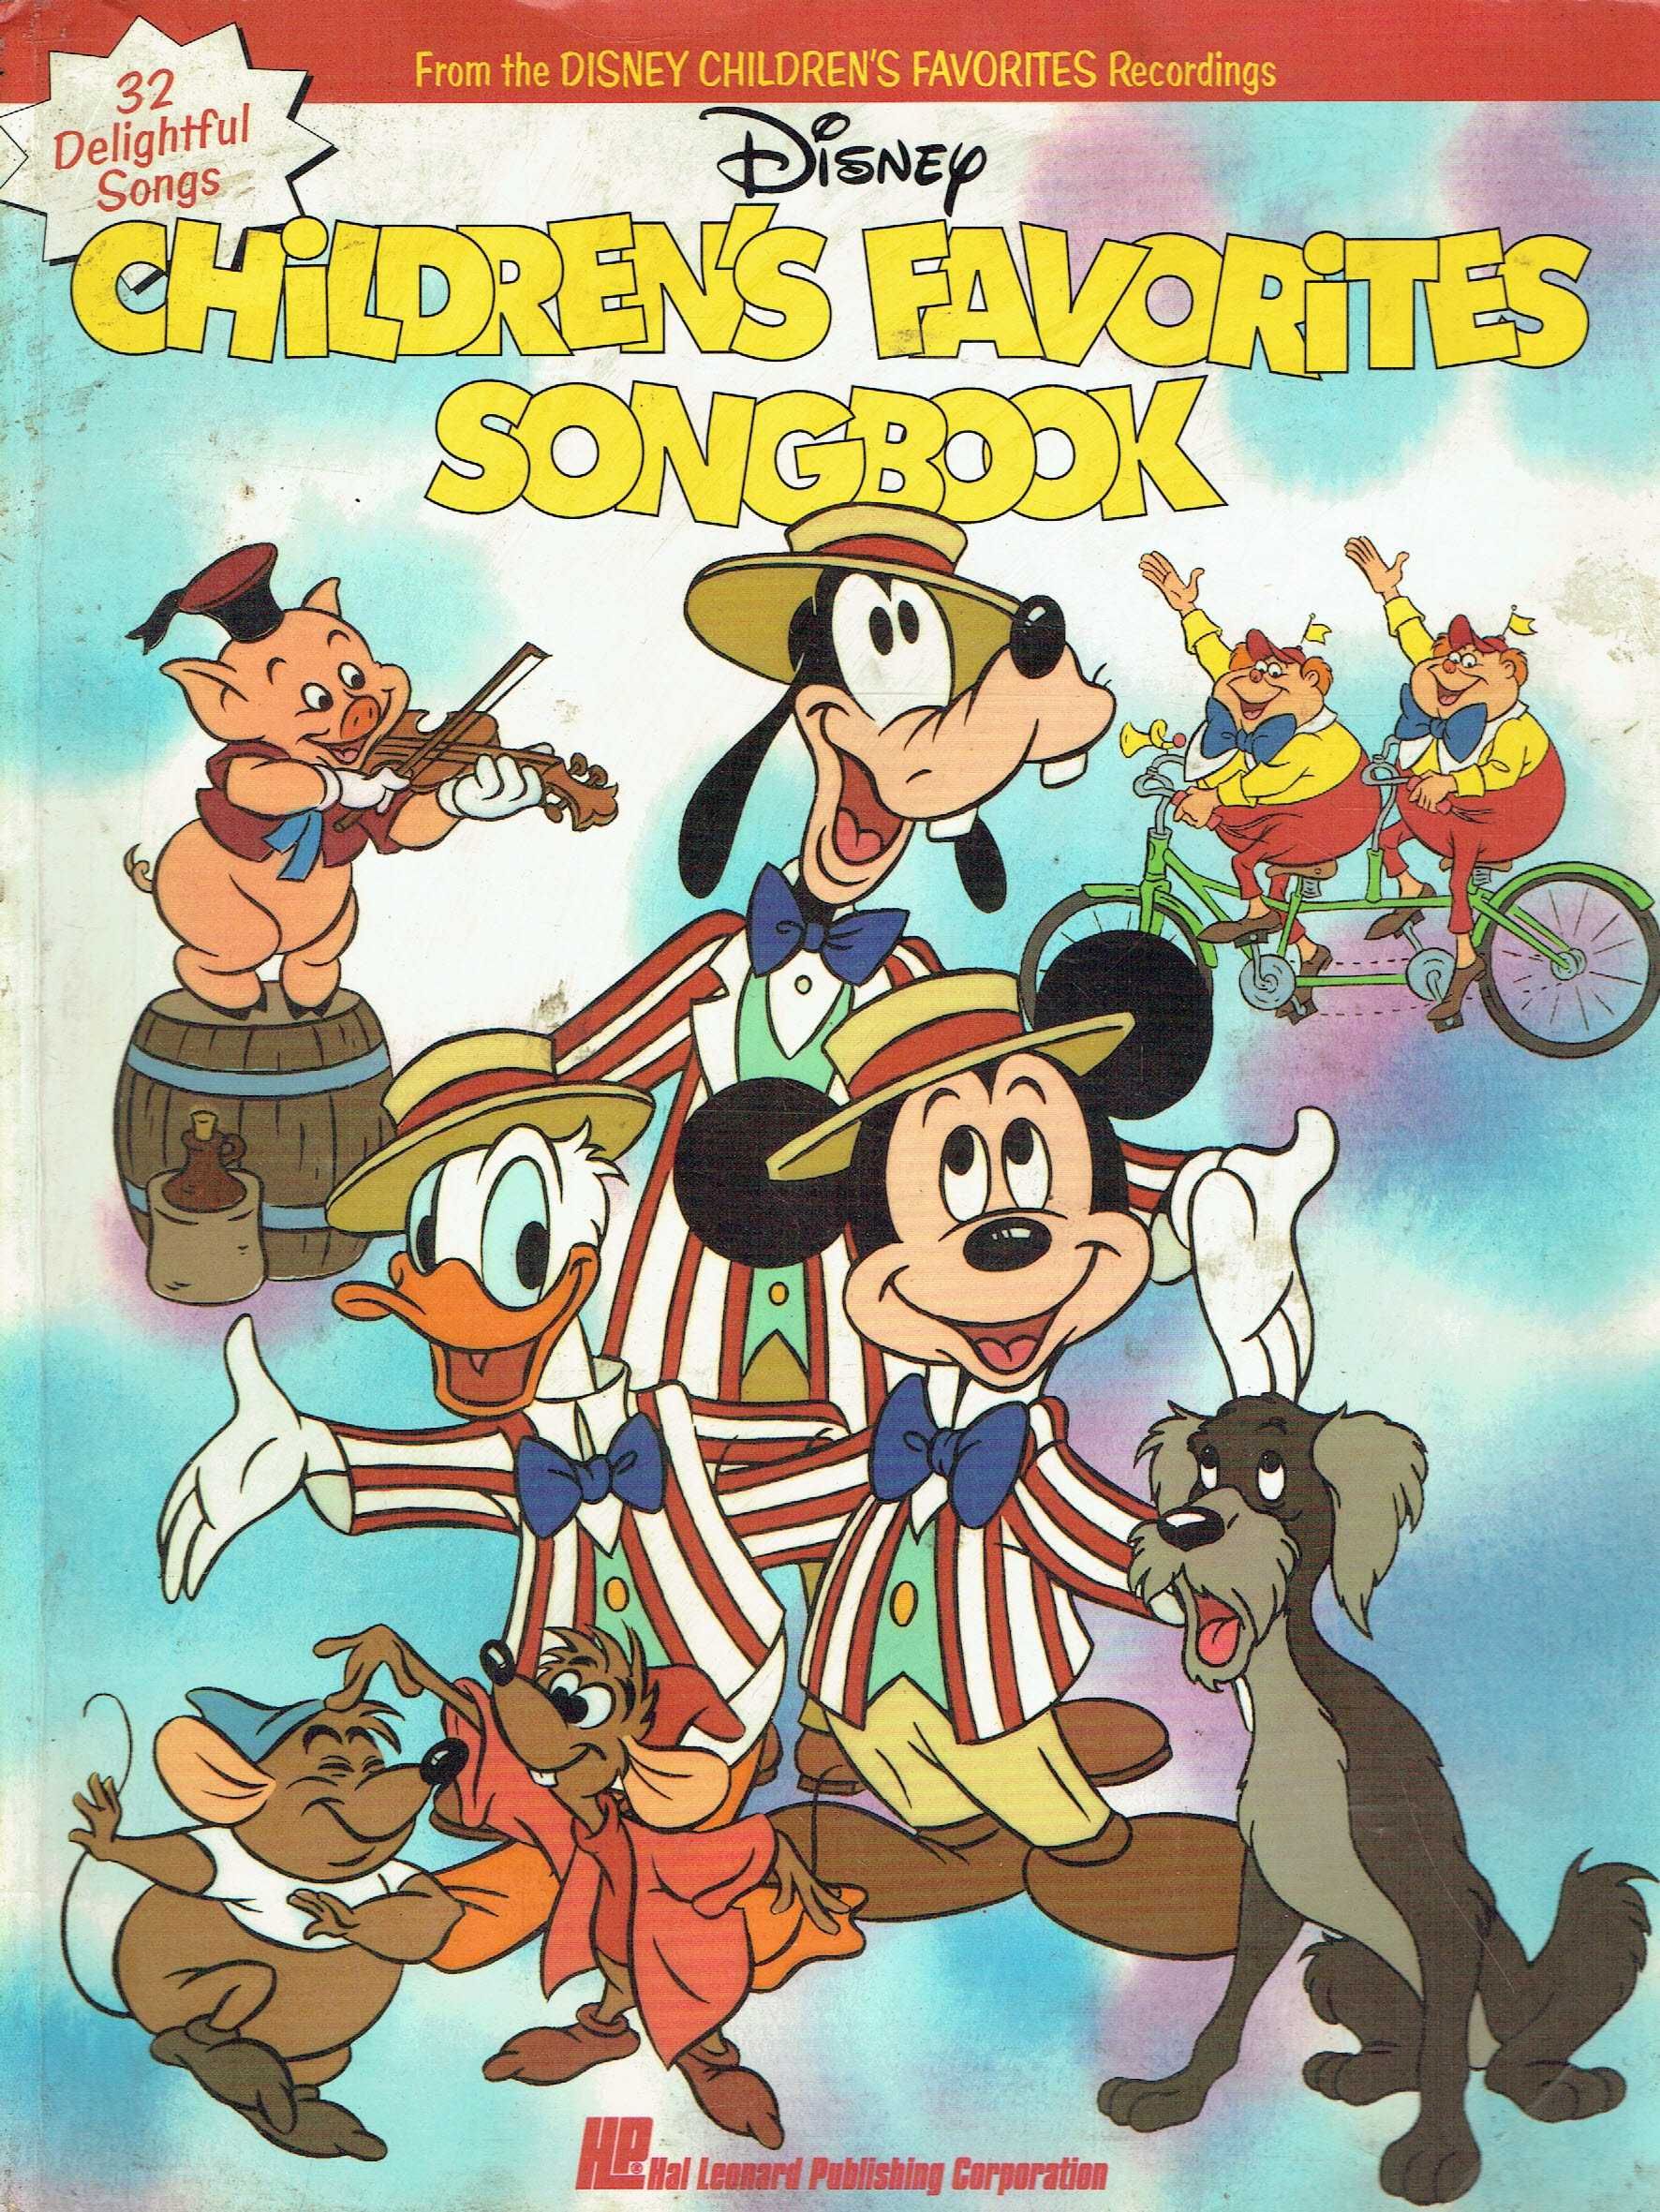 7499

Disney - Children's Favorites Songbook